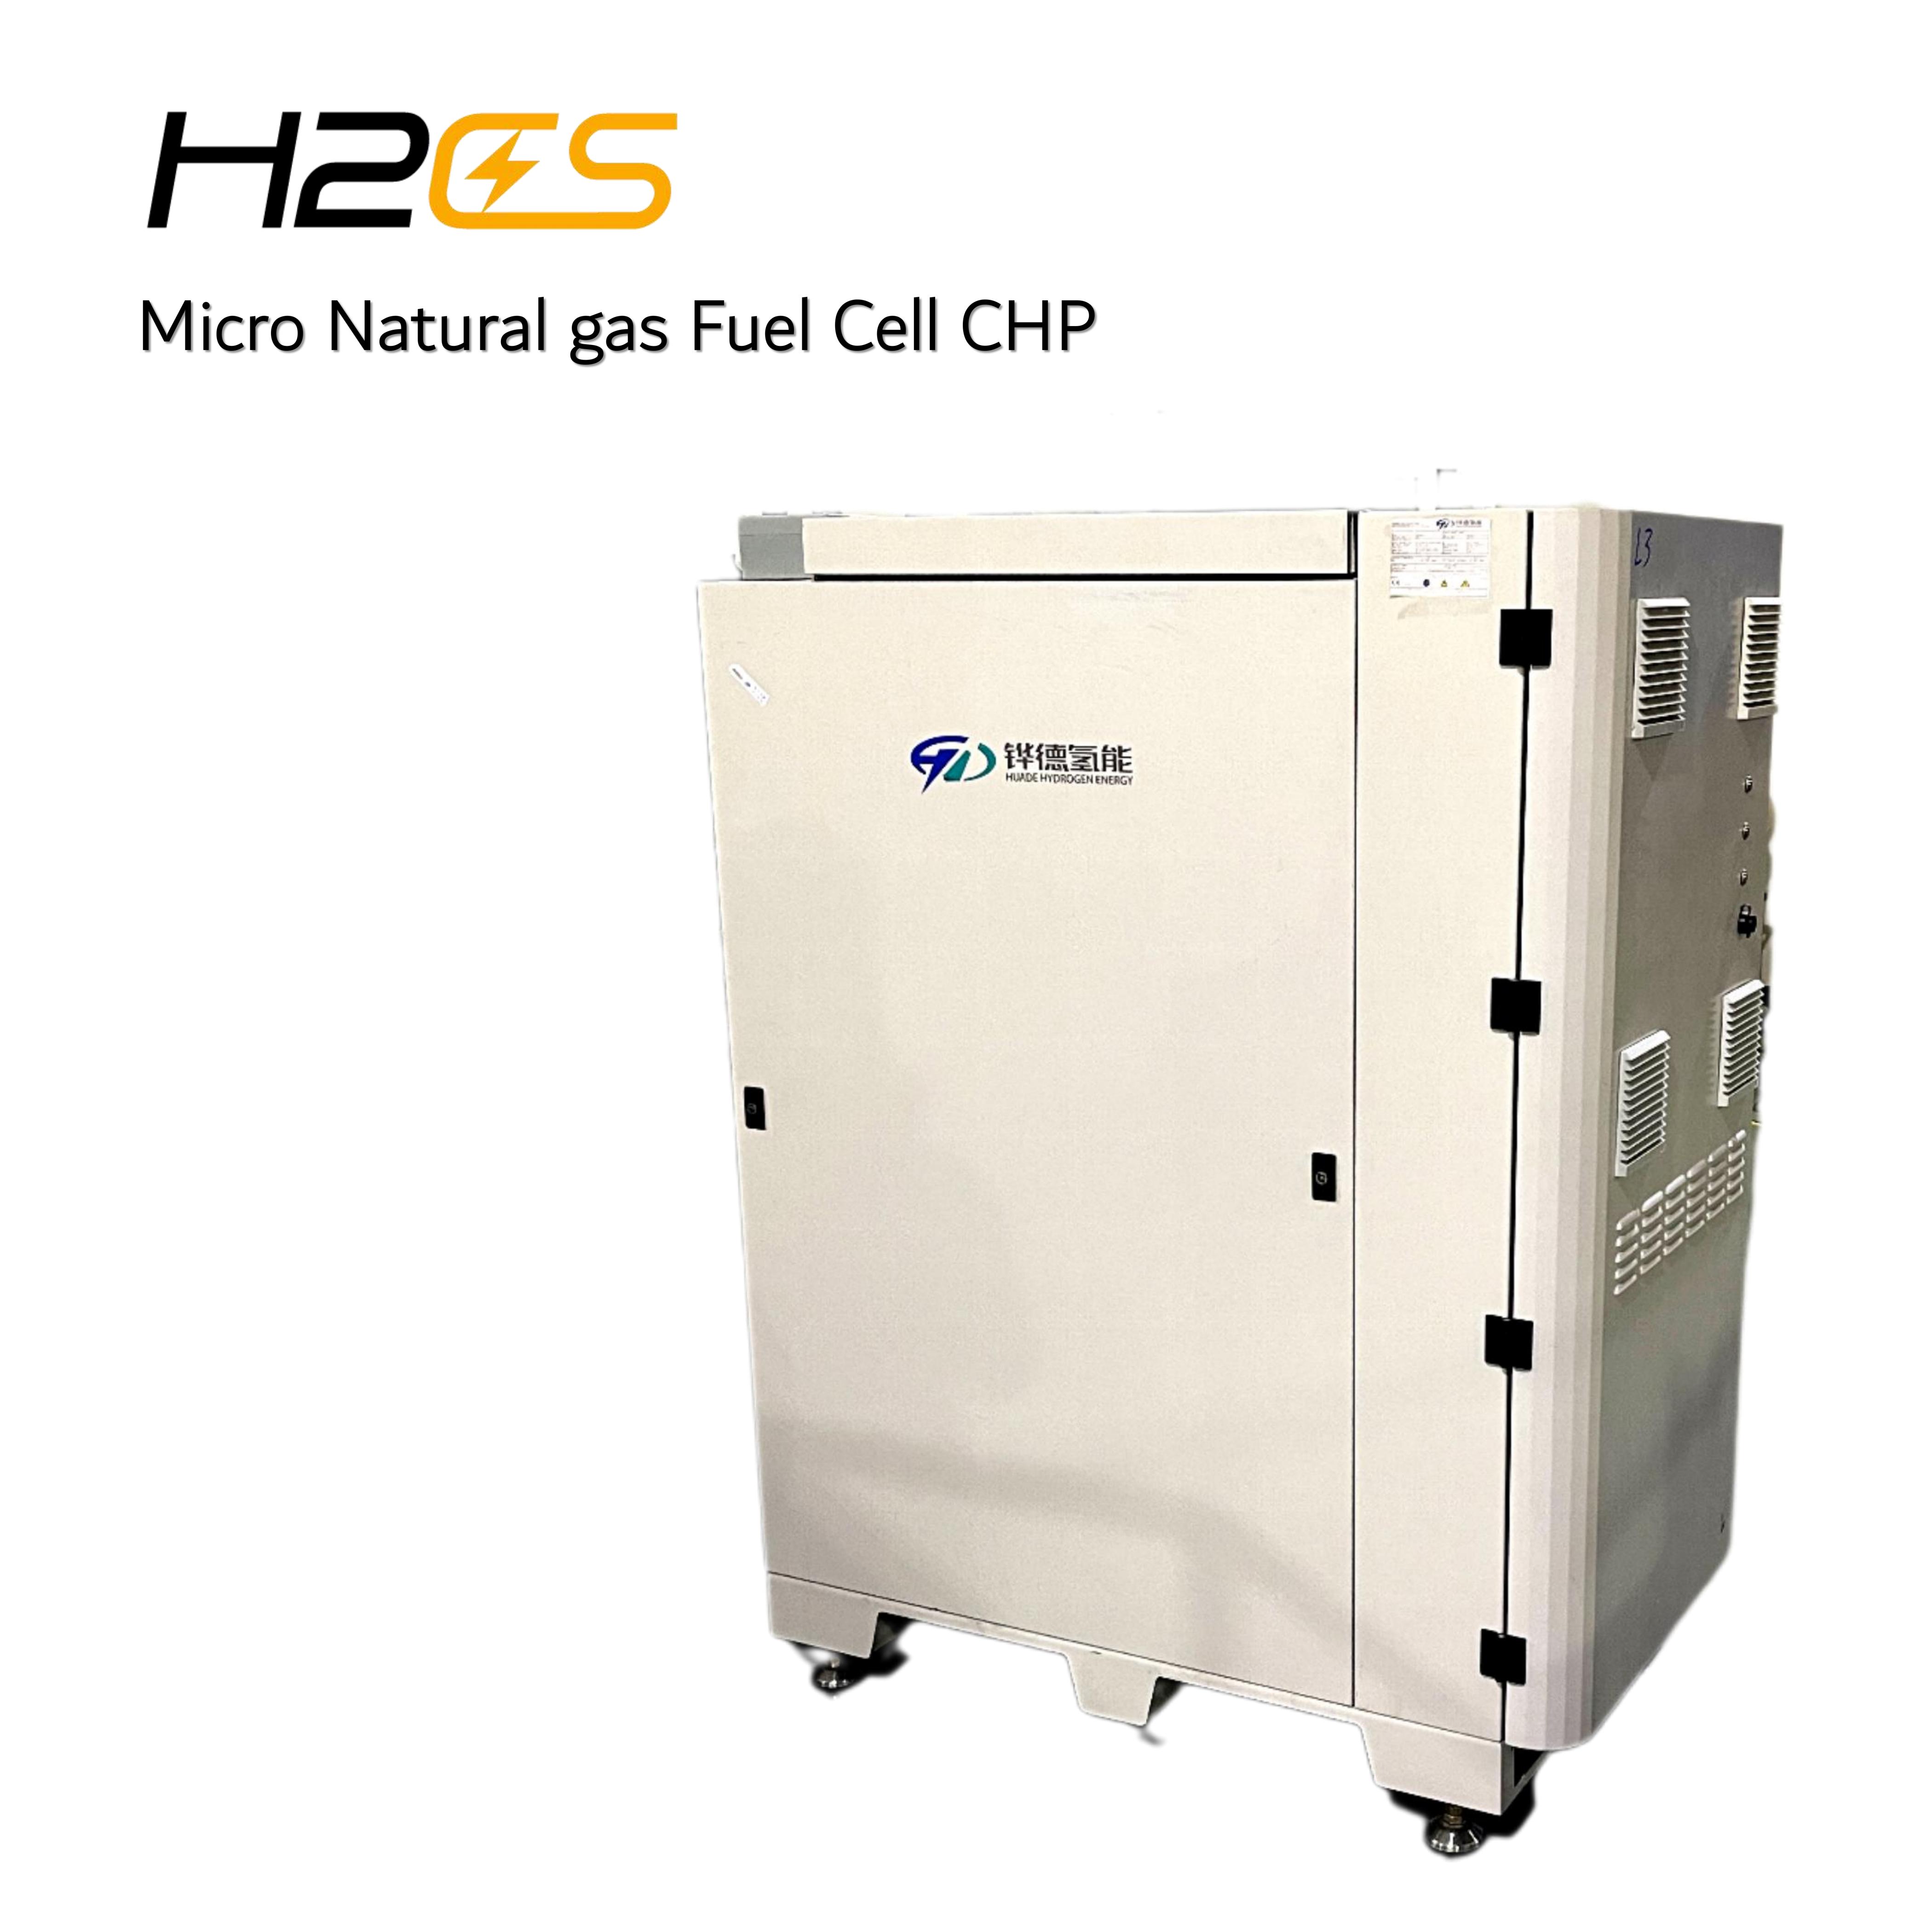 Microgrid-Brennstoffzellen-Kühl-KWK-System